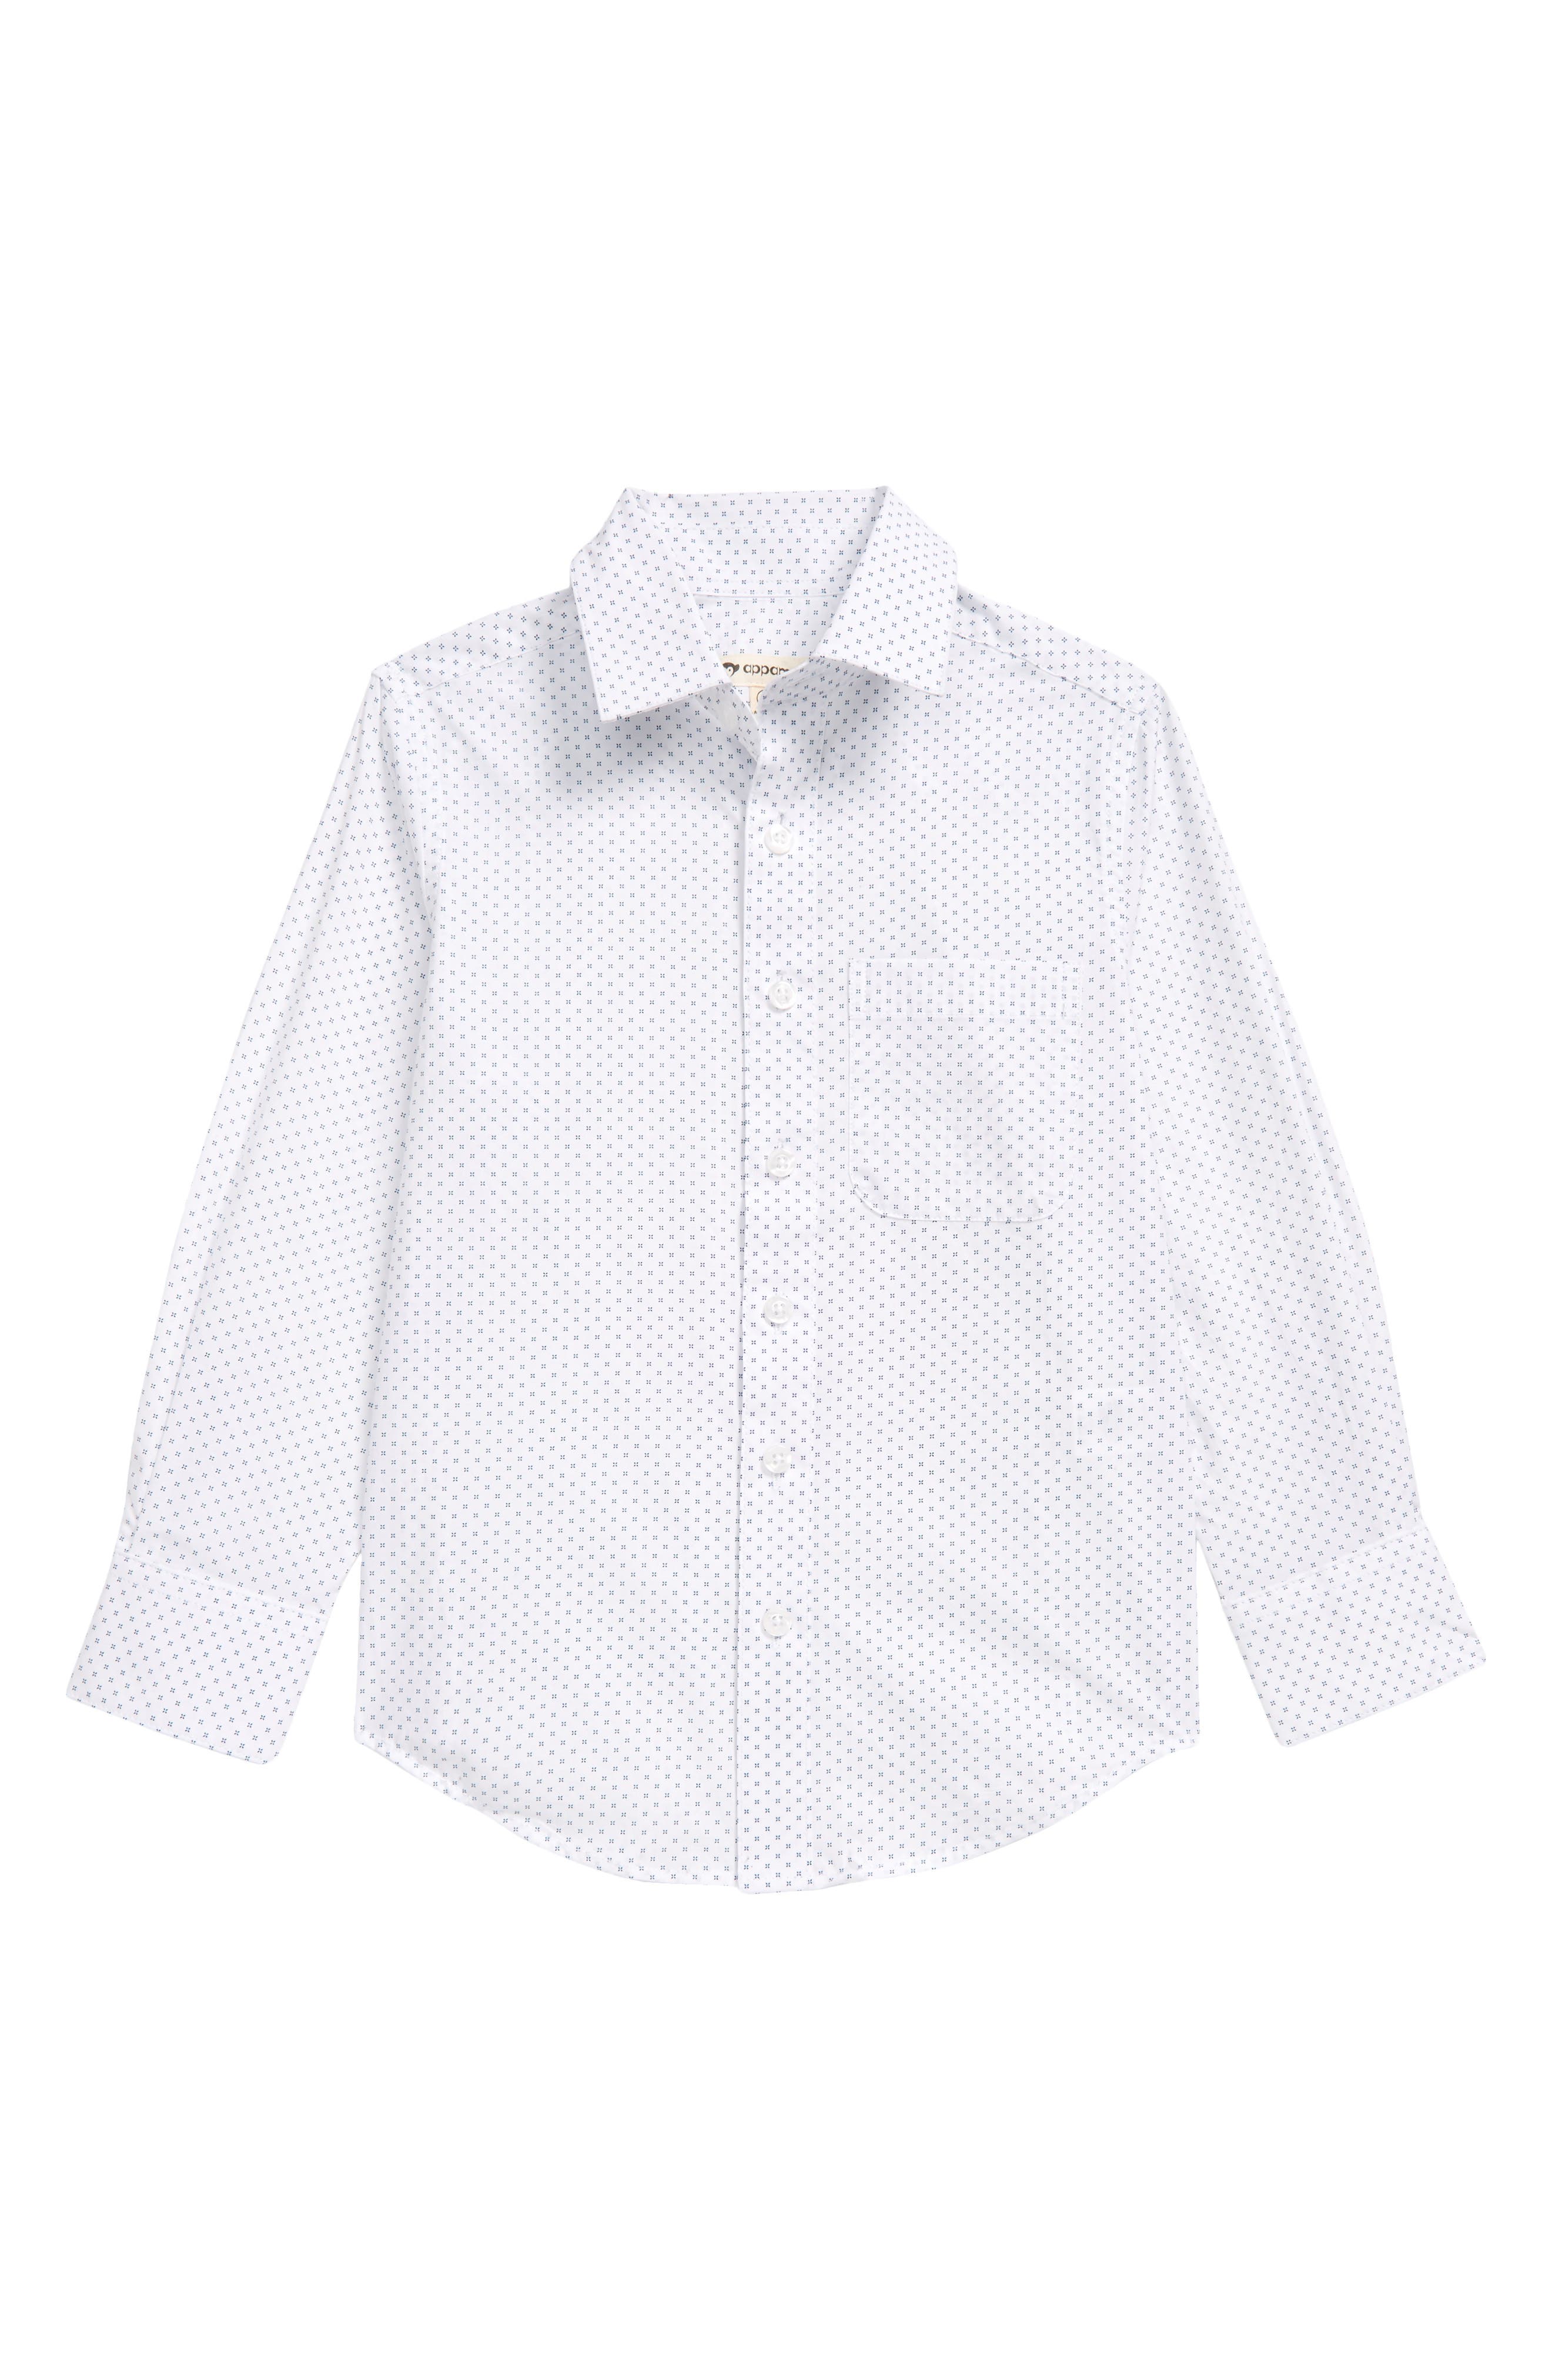 Toddler/Little Kid/Big Kid Wnitefg Boys Long Sleeve Button Down Oxford Shirt